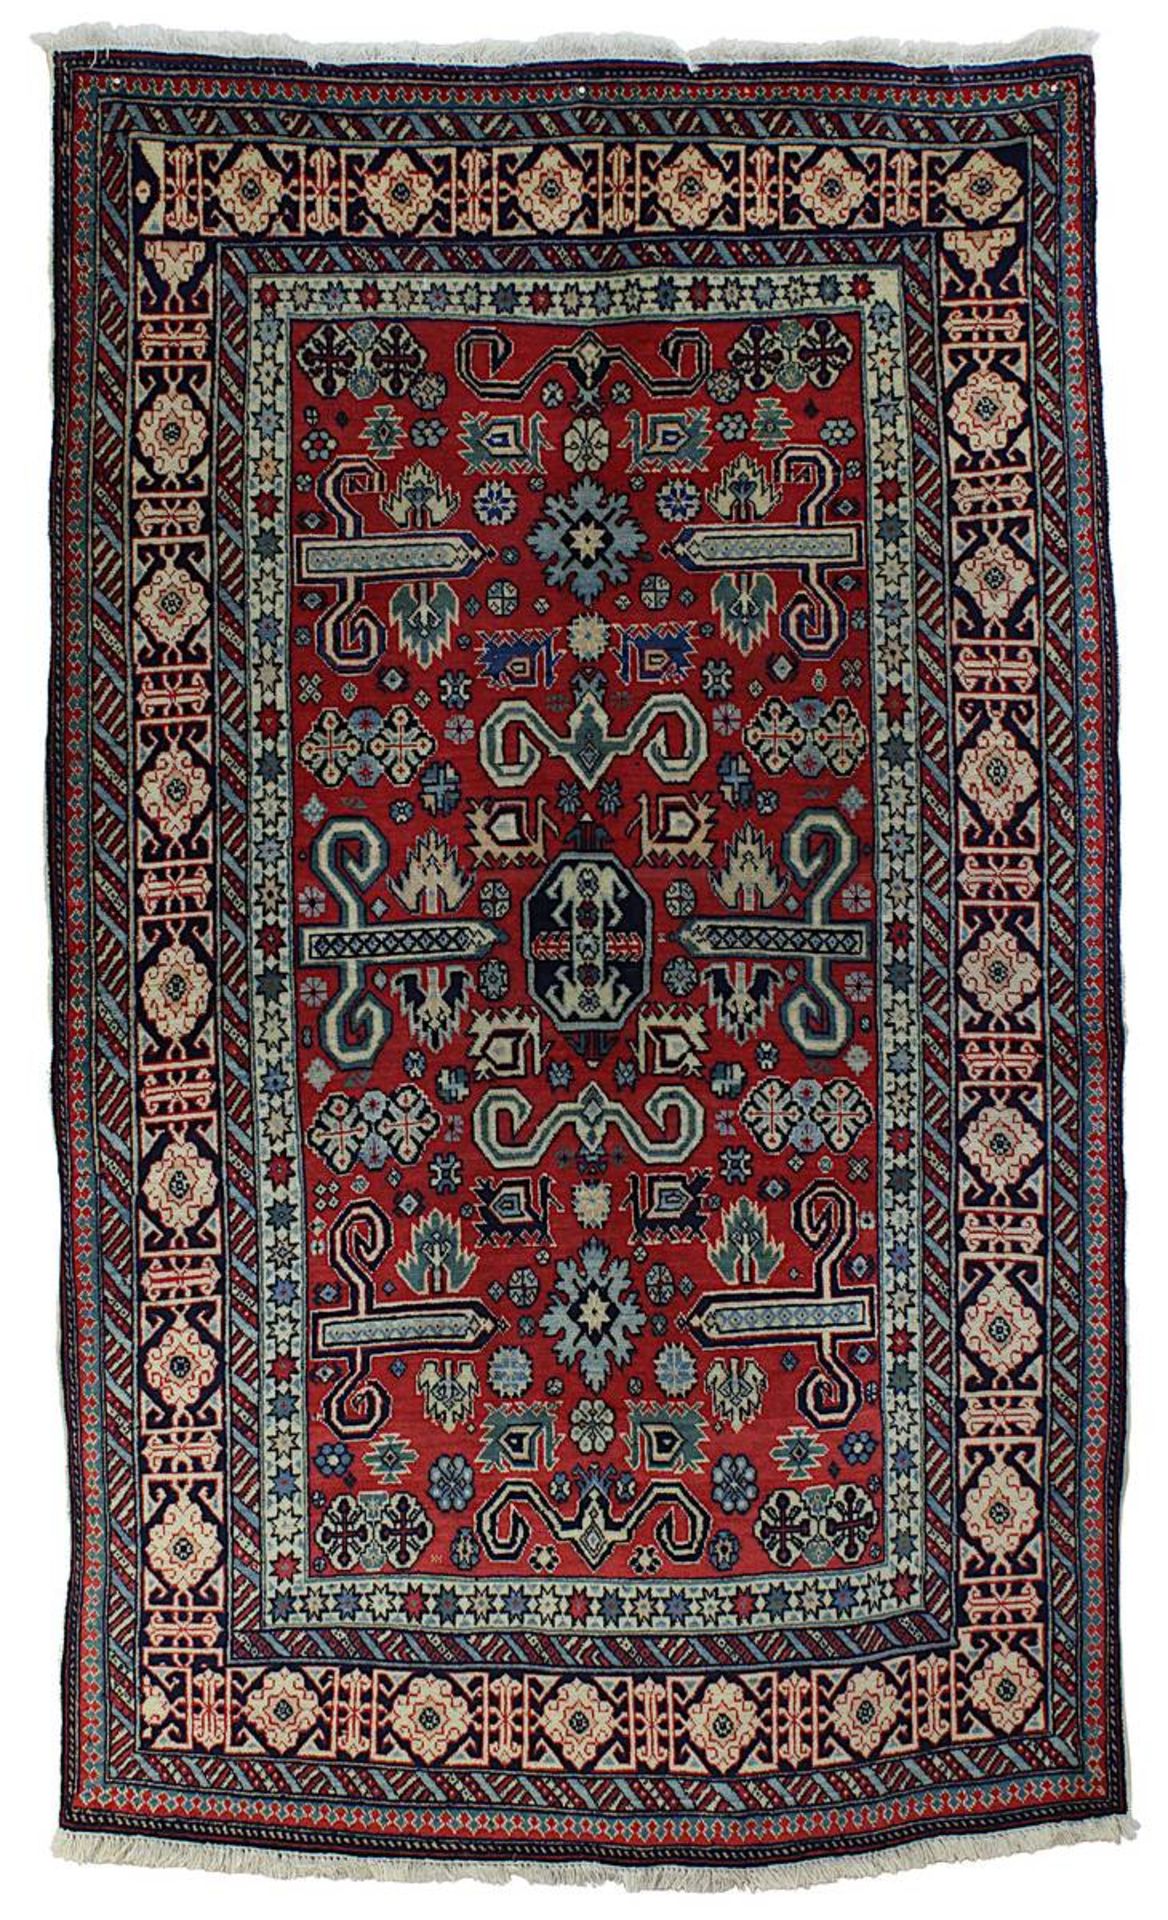 Perepedil, Kaukasus 1. H. 20. Jh., Wolle auf Baumwolle, rotgrundiger Fond,